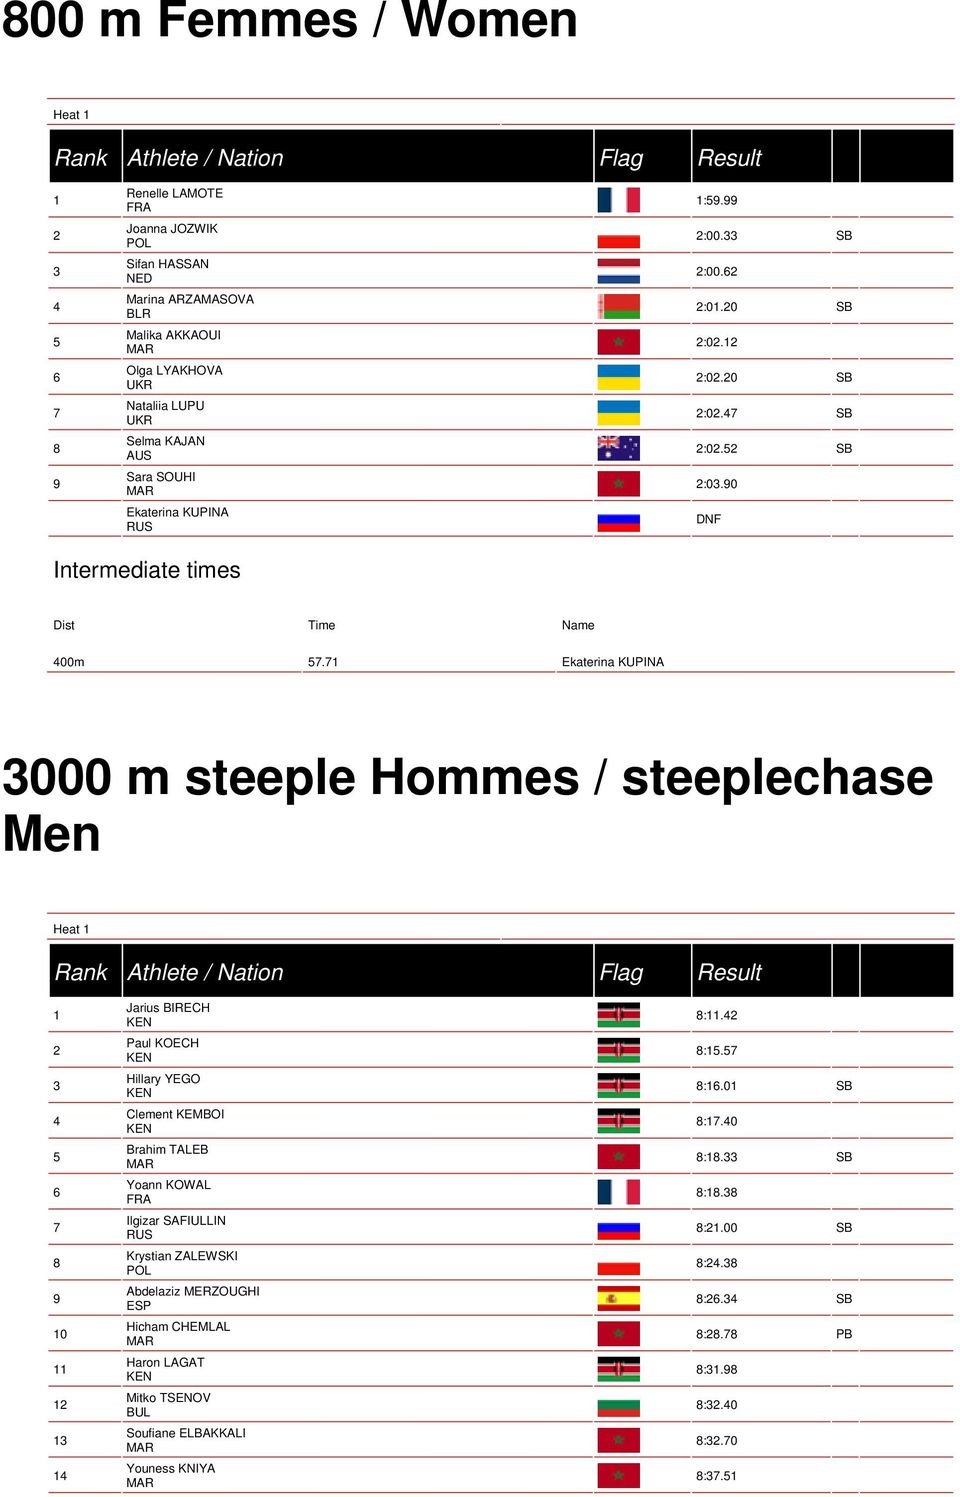 Ekaterina KUPINA 000 m steeple Hommes / steeplechase Men Heat 0 Jarius BIRECH Paul KOECH Hillary YEGO Clement KEMBOI Brahim TALEB Yoann KOWAL